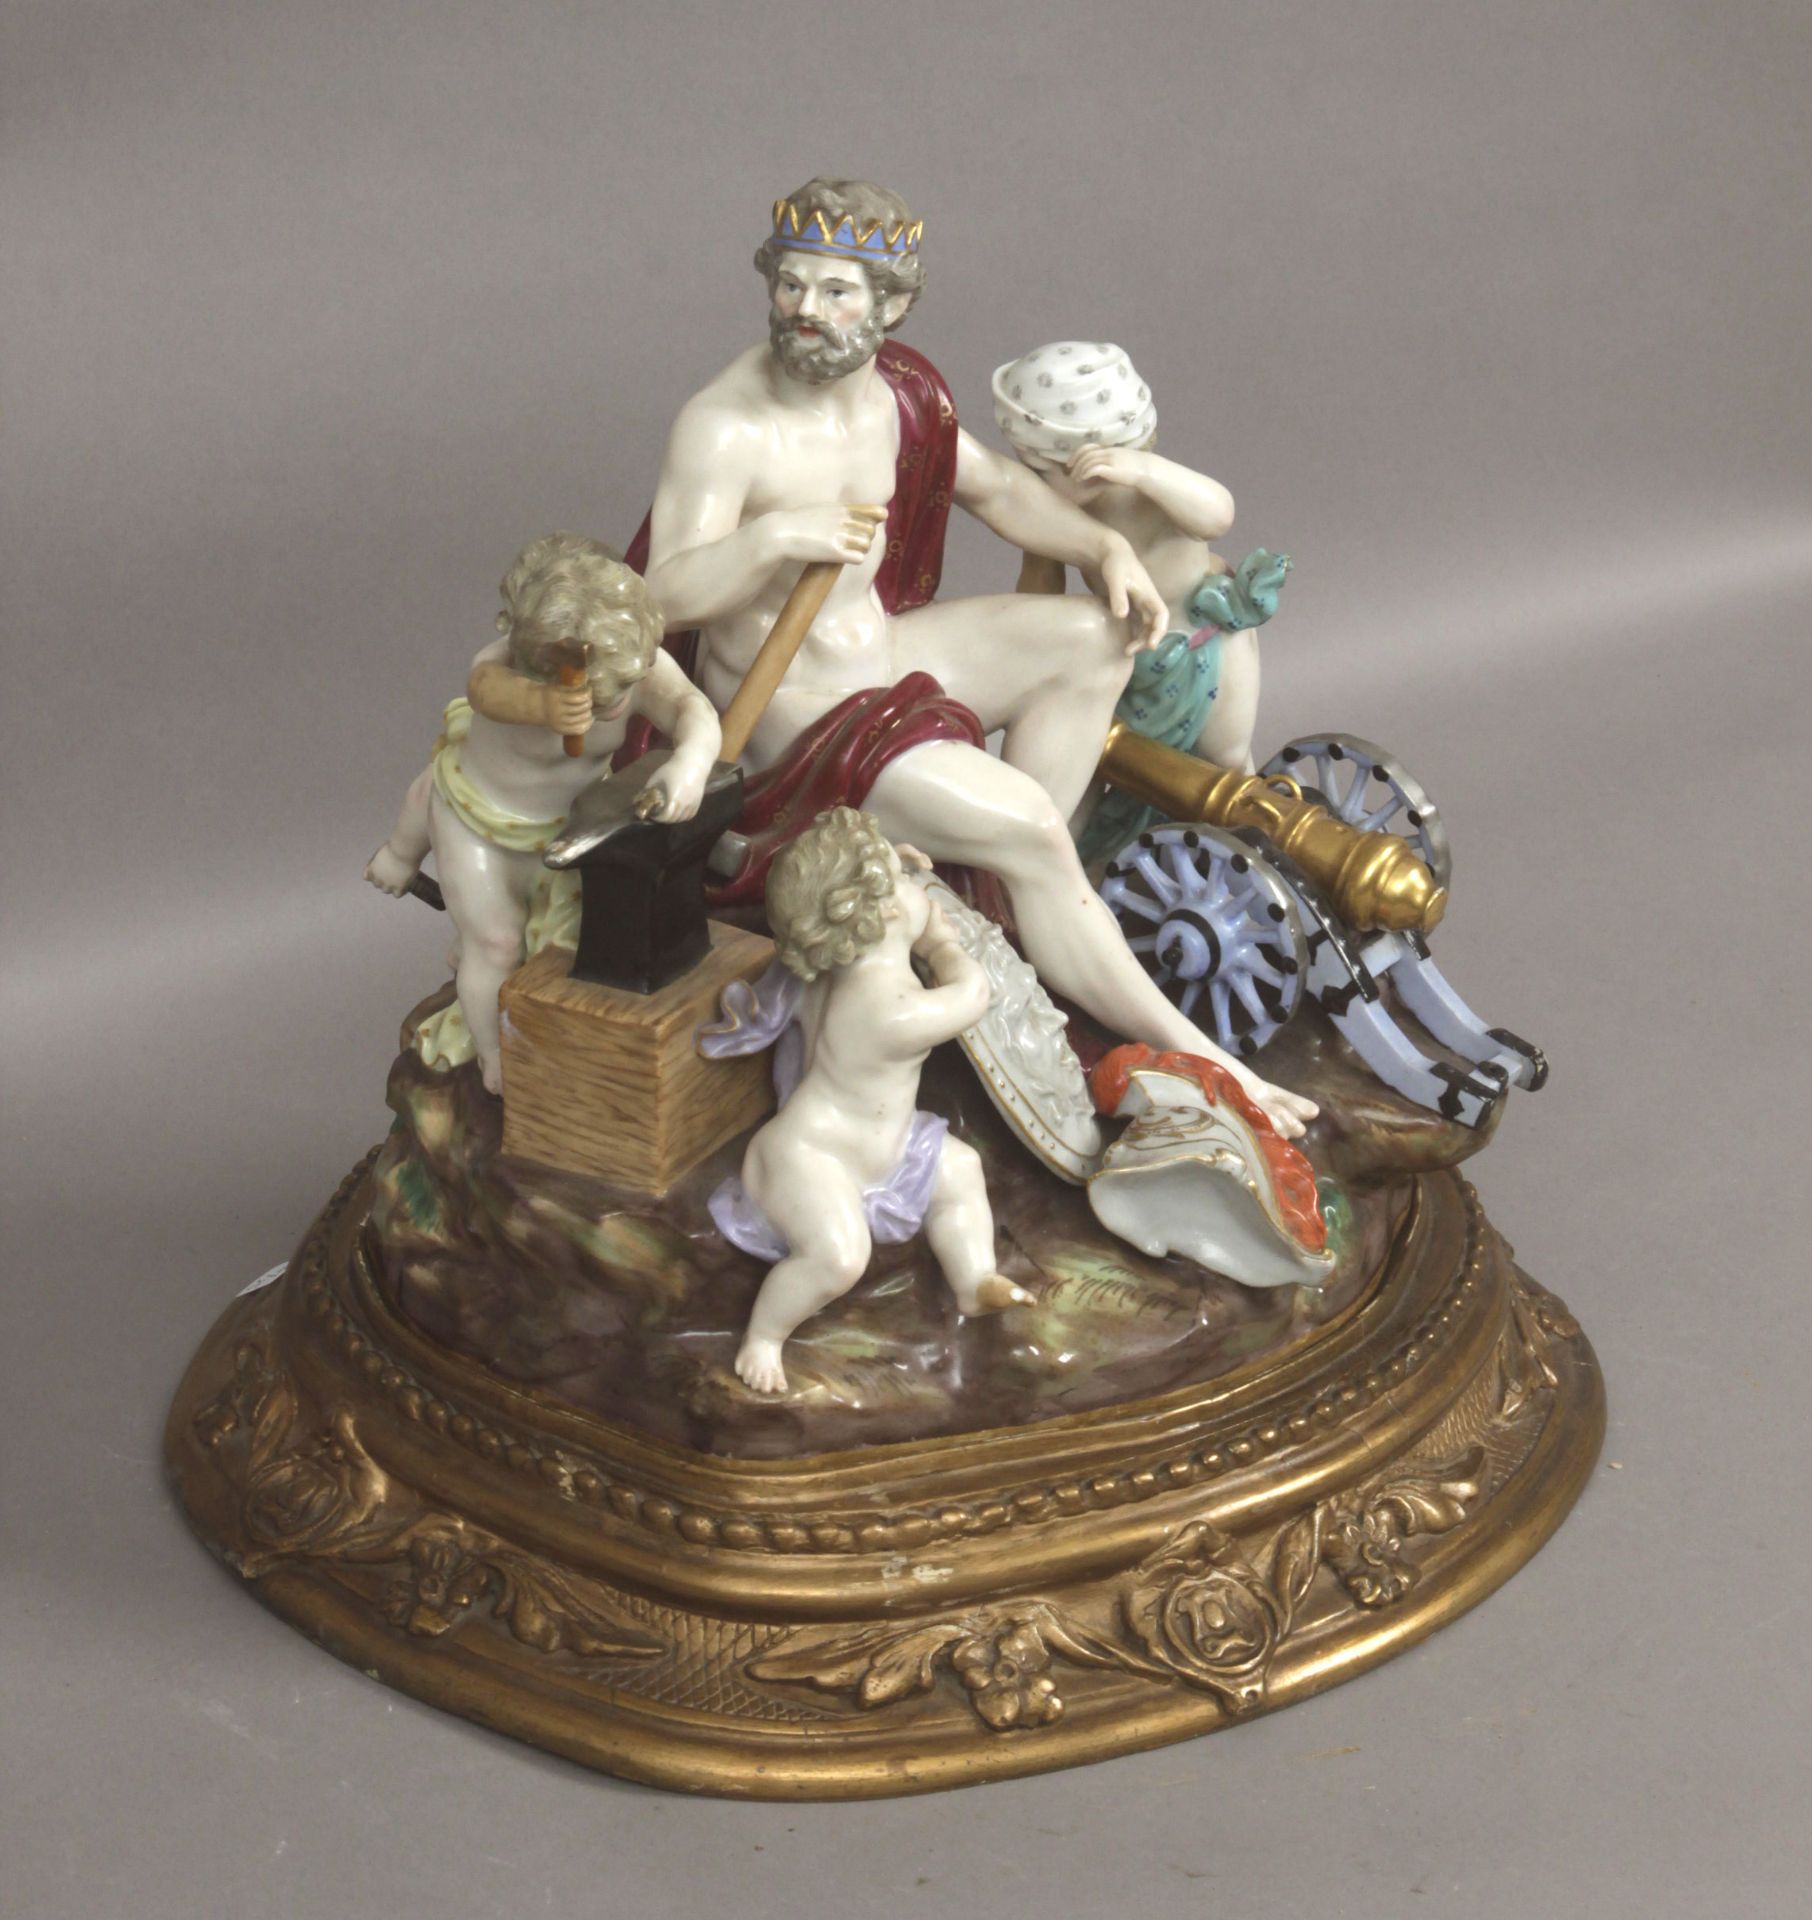 A 19th century mythological scene in Meissen porcelain - Image 2 of 6